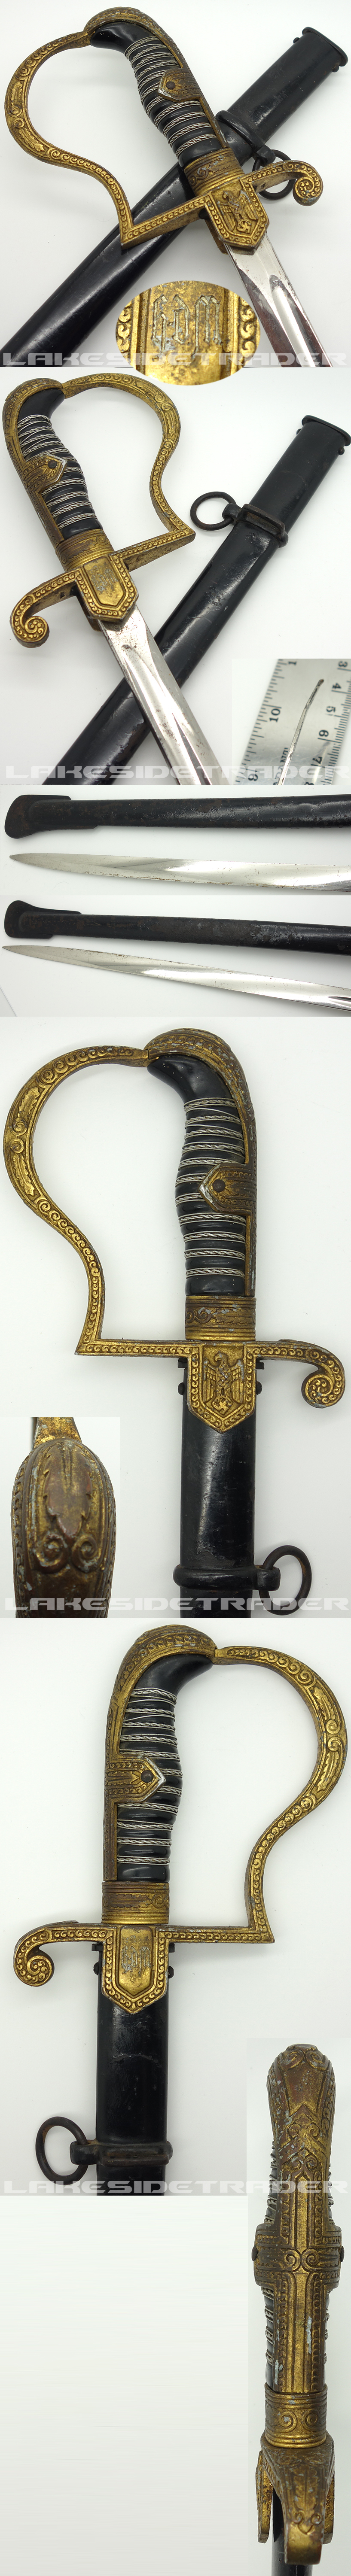 Eickhorn Flat-bow Derfflinger Personalized Field Marshal Sword